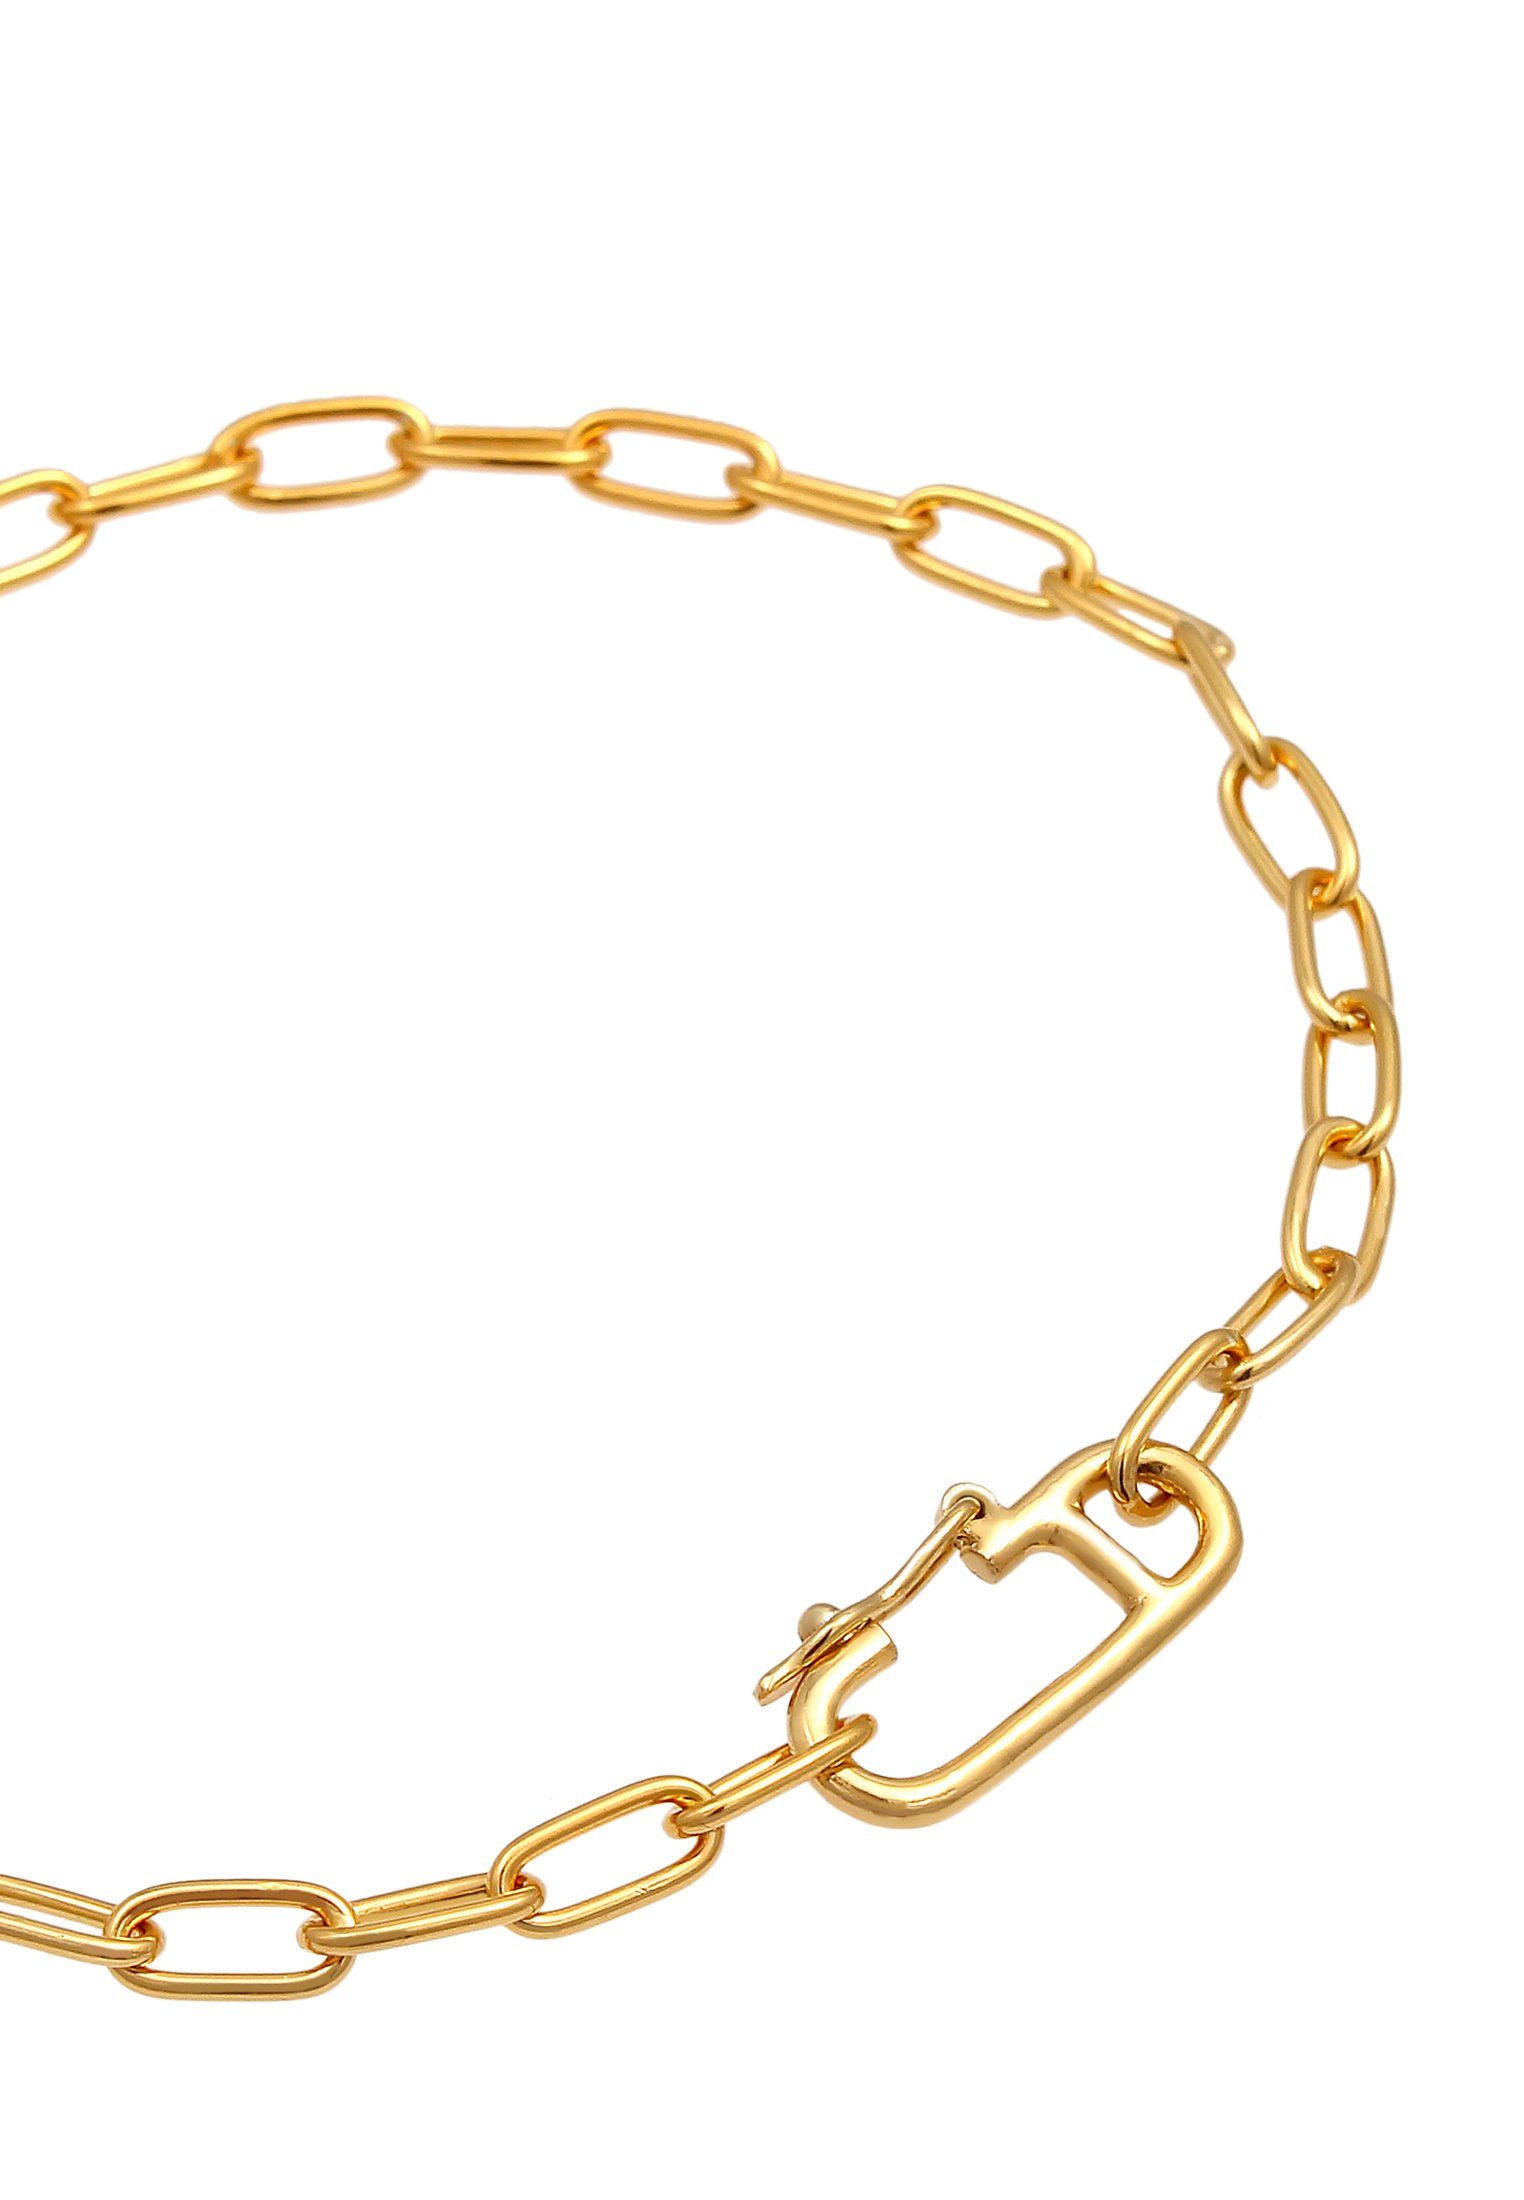 925 Verstellbar Oval Armband Elli Silber Glieder Trend Gold